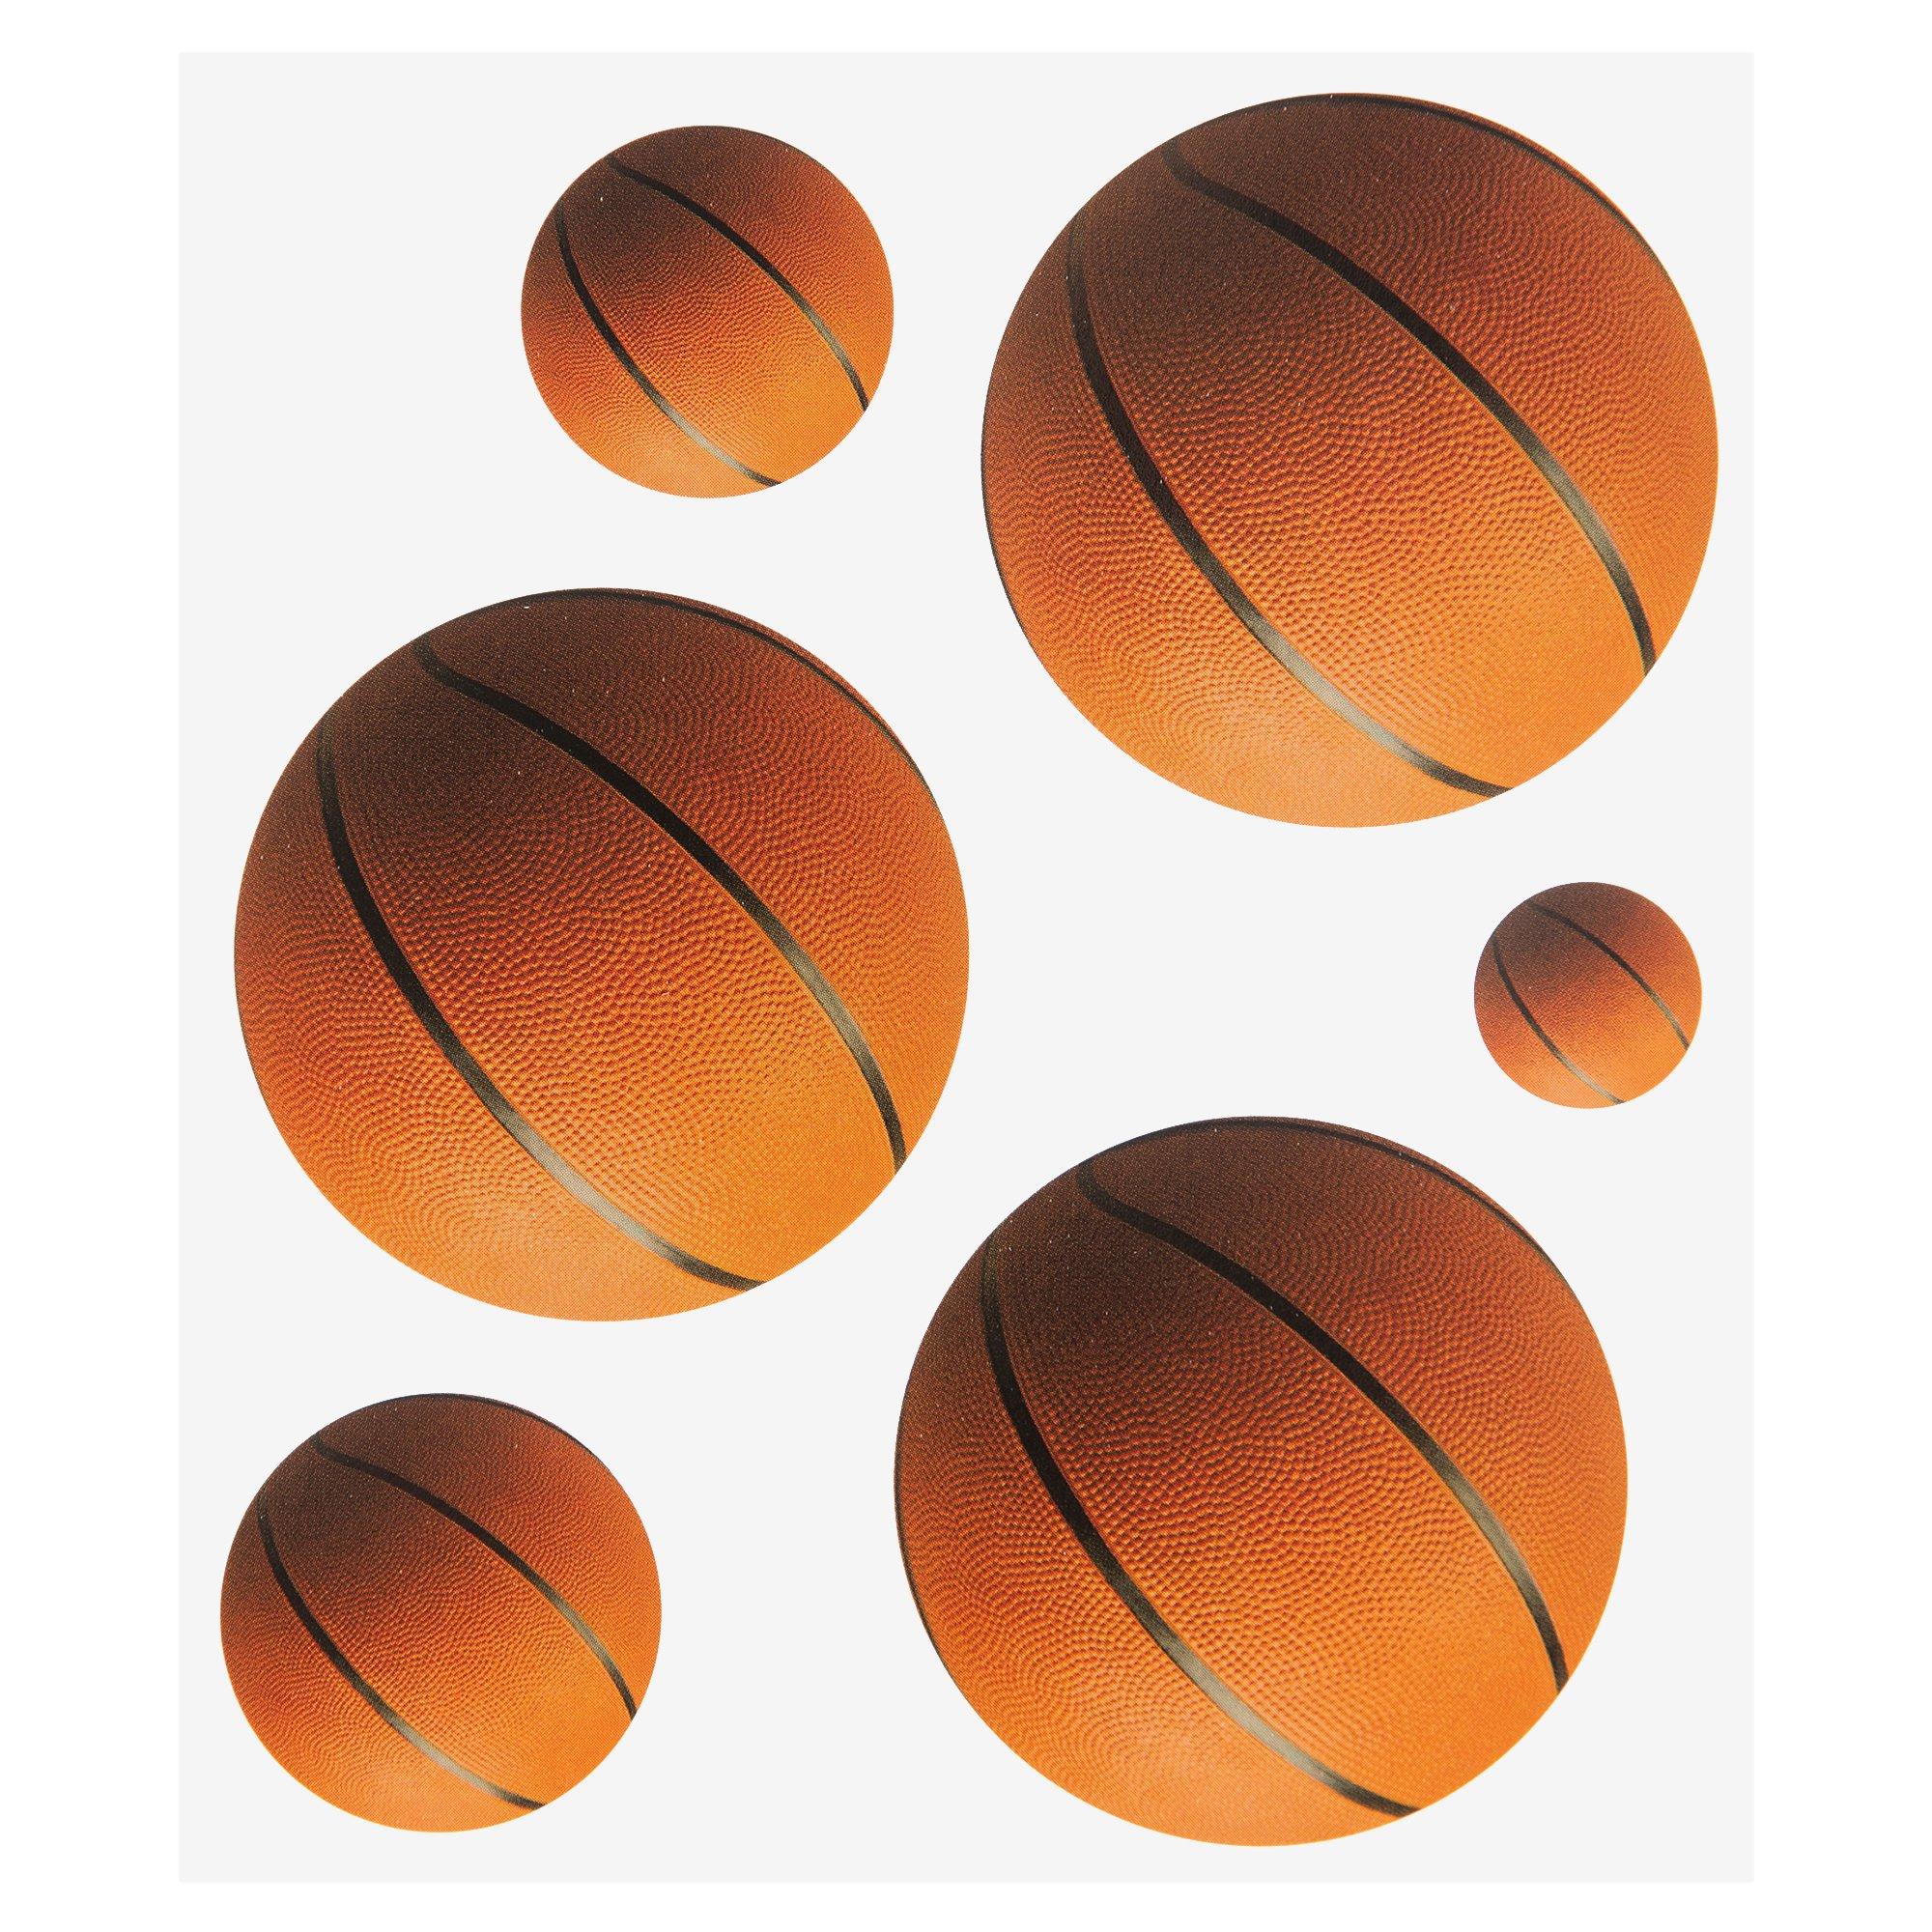 THE PAPER STUDIO BASKETBALL 3D La Petites Scrapboooking Stickers SPORTS NEW  $5.00 - PicClick